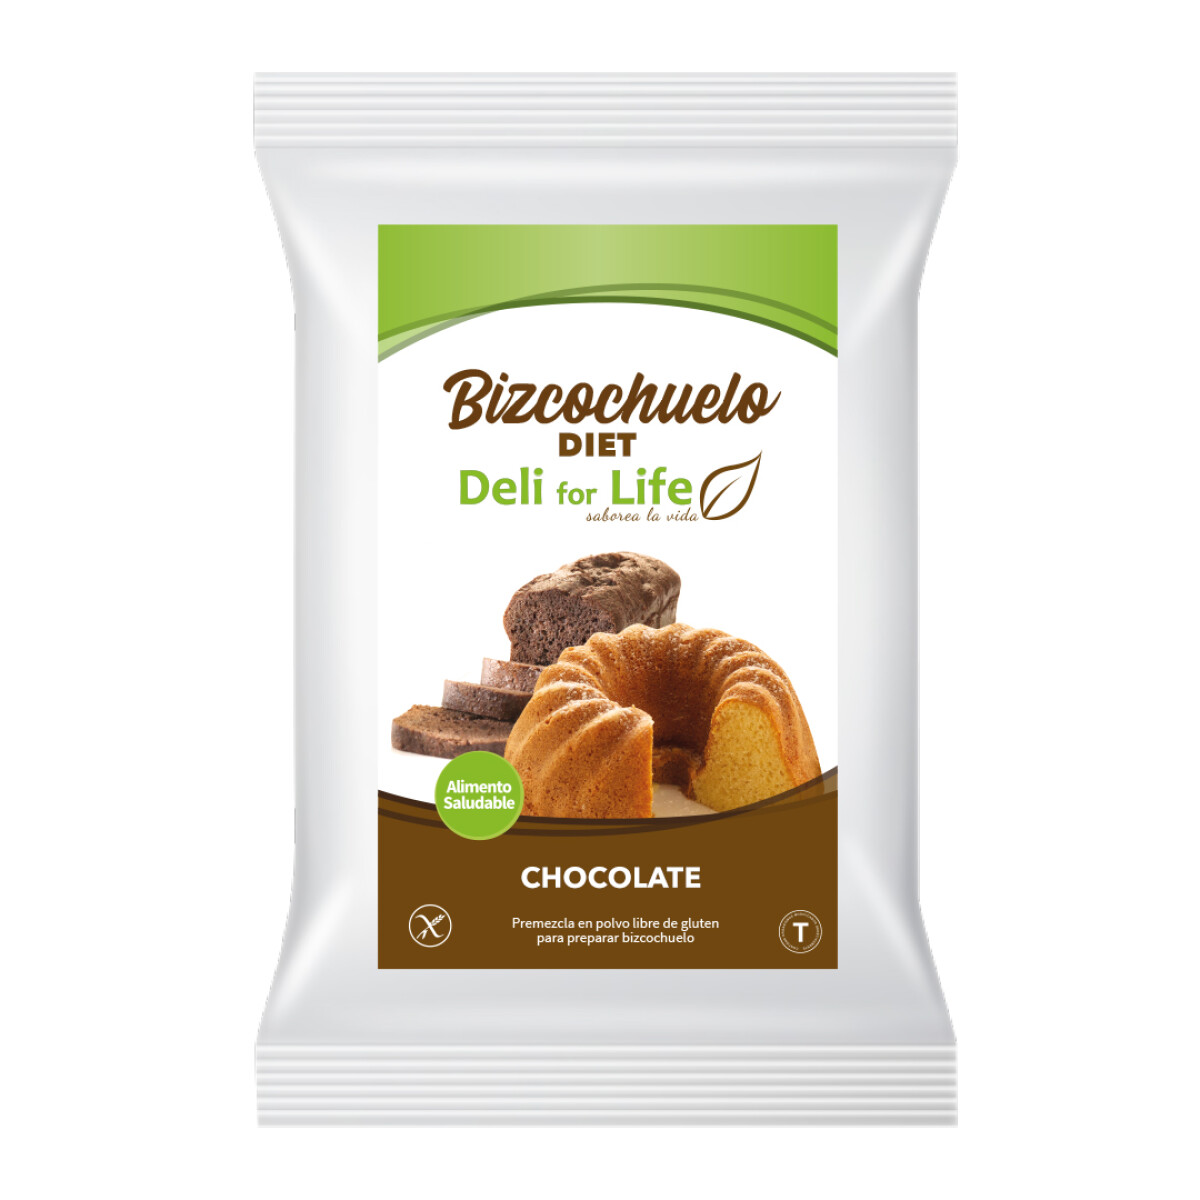 Premezcla De Bizcochuelo De Chocolate Diet Deli For Life 500g 